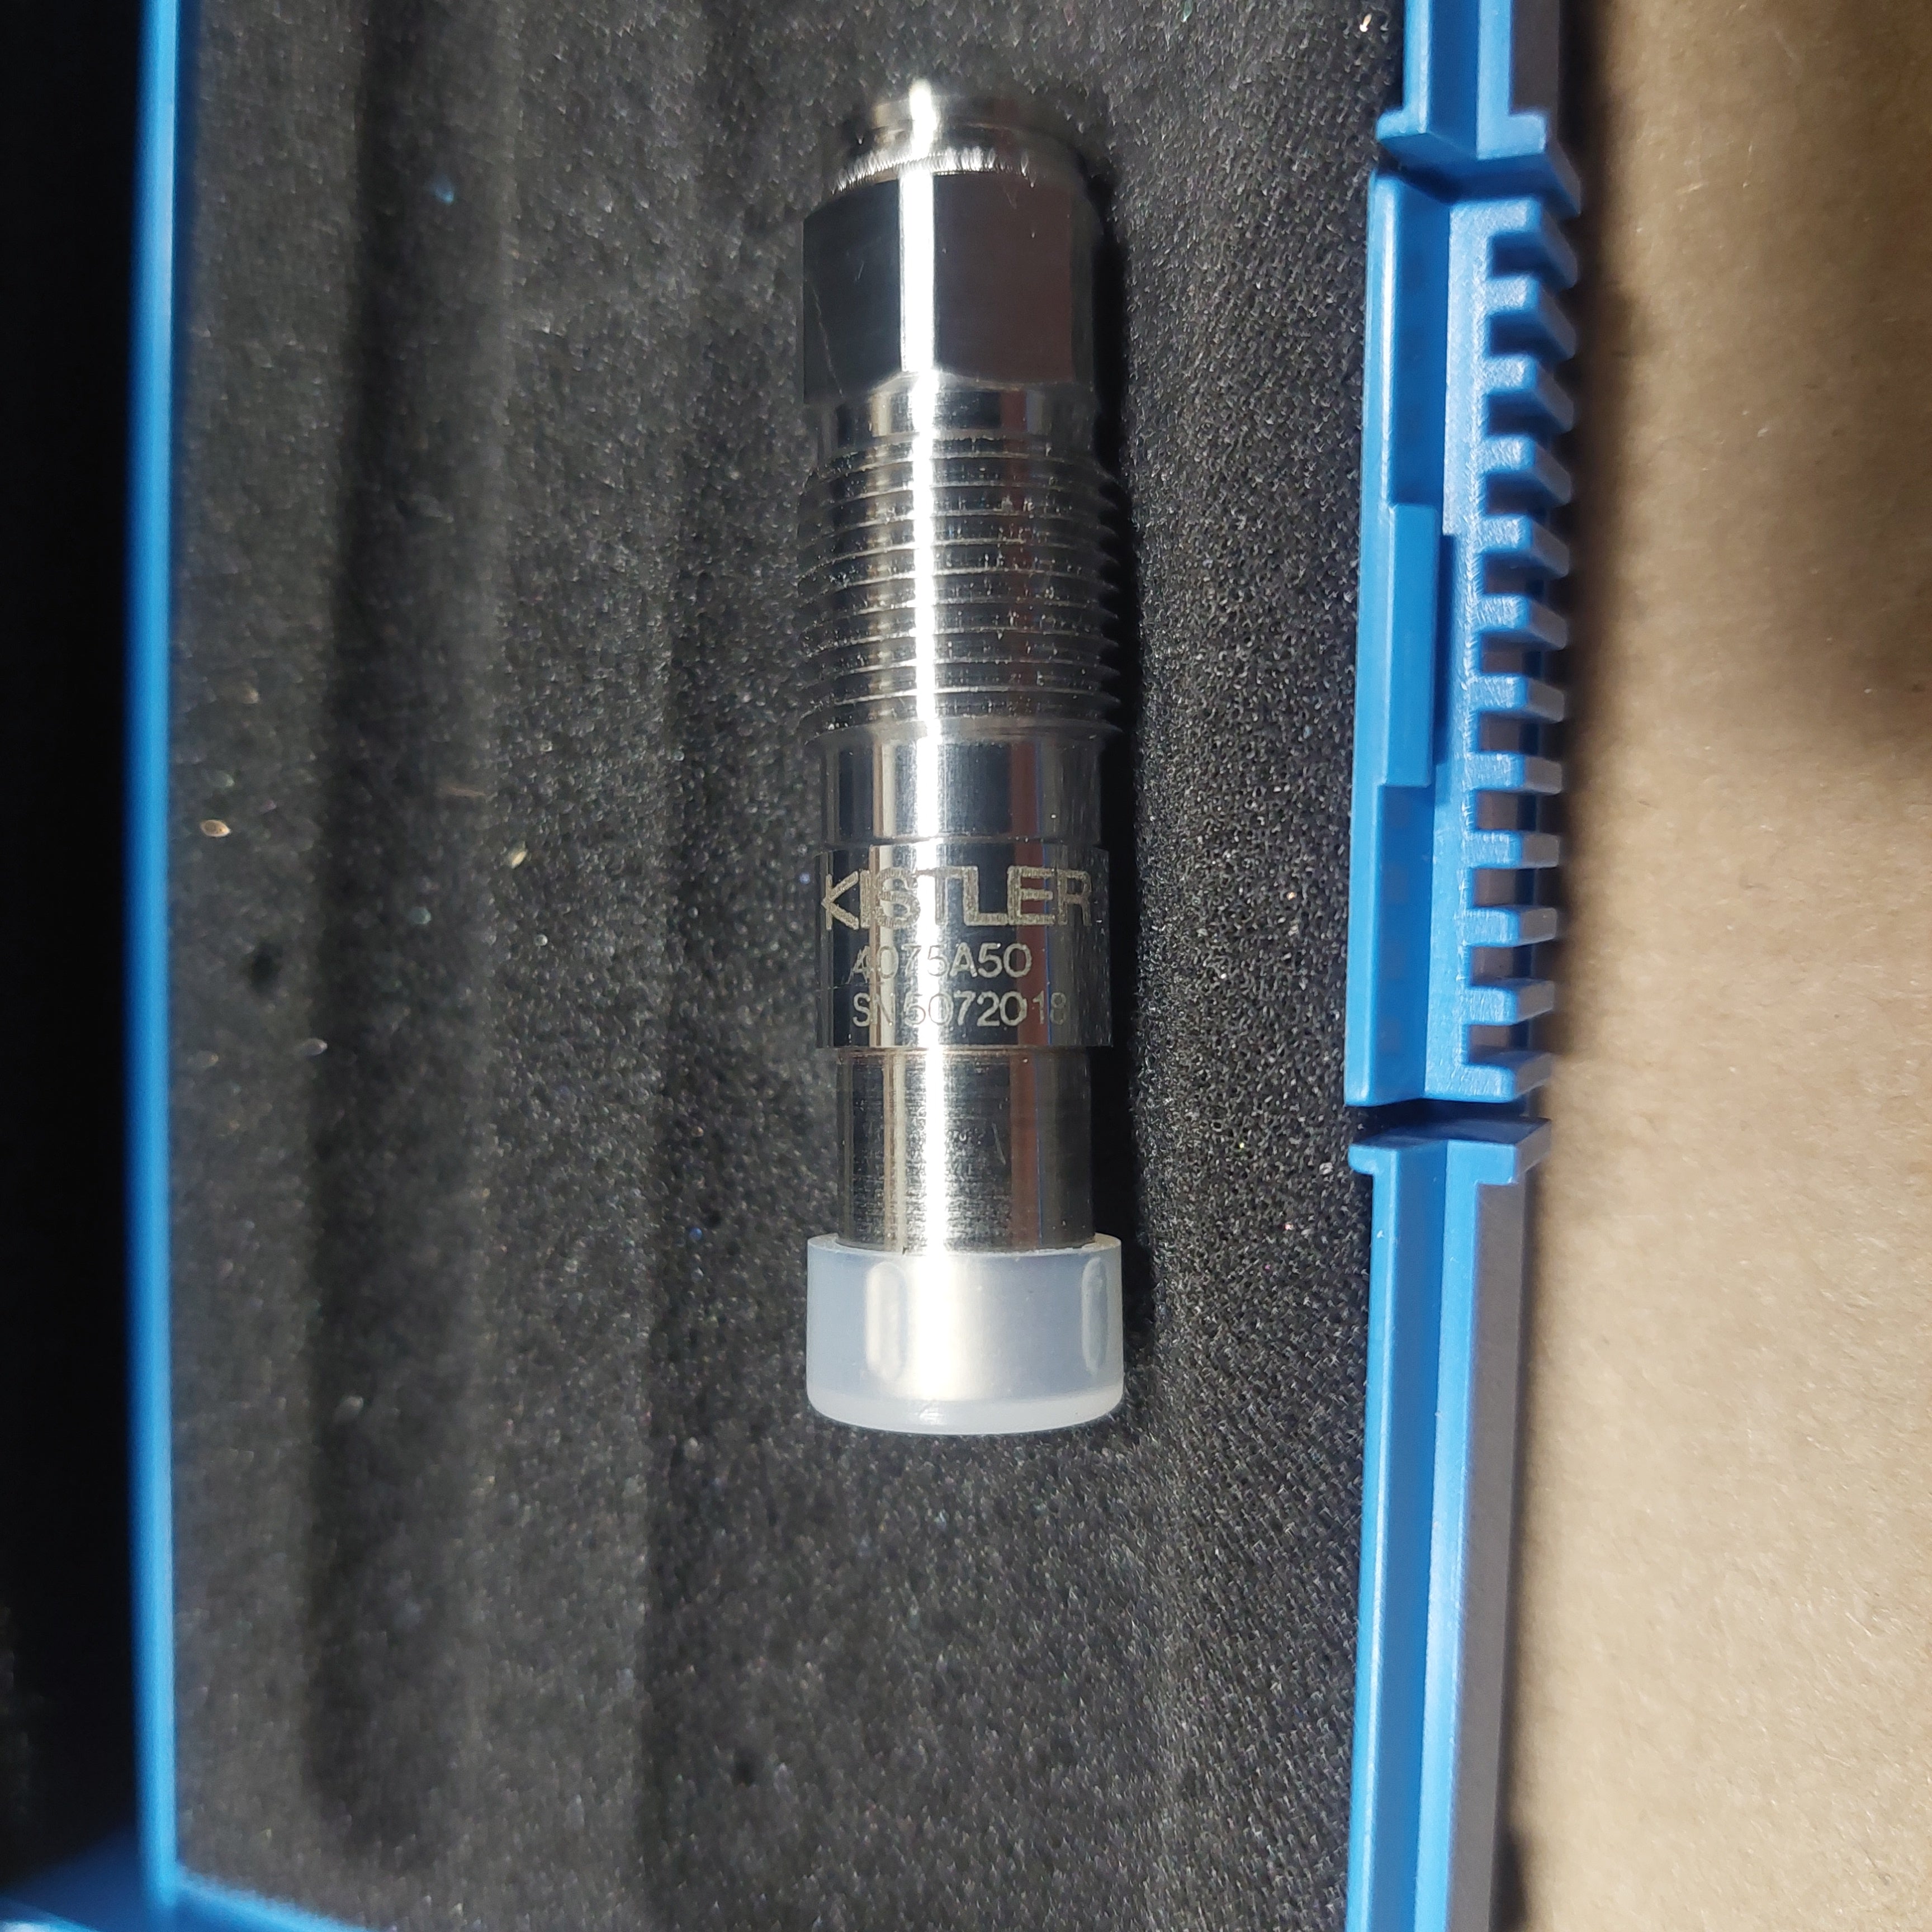 2017 Kistler 4075A50 Piezoresistive Absolute Pressure Sensor 0-50 bar 4mA New